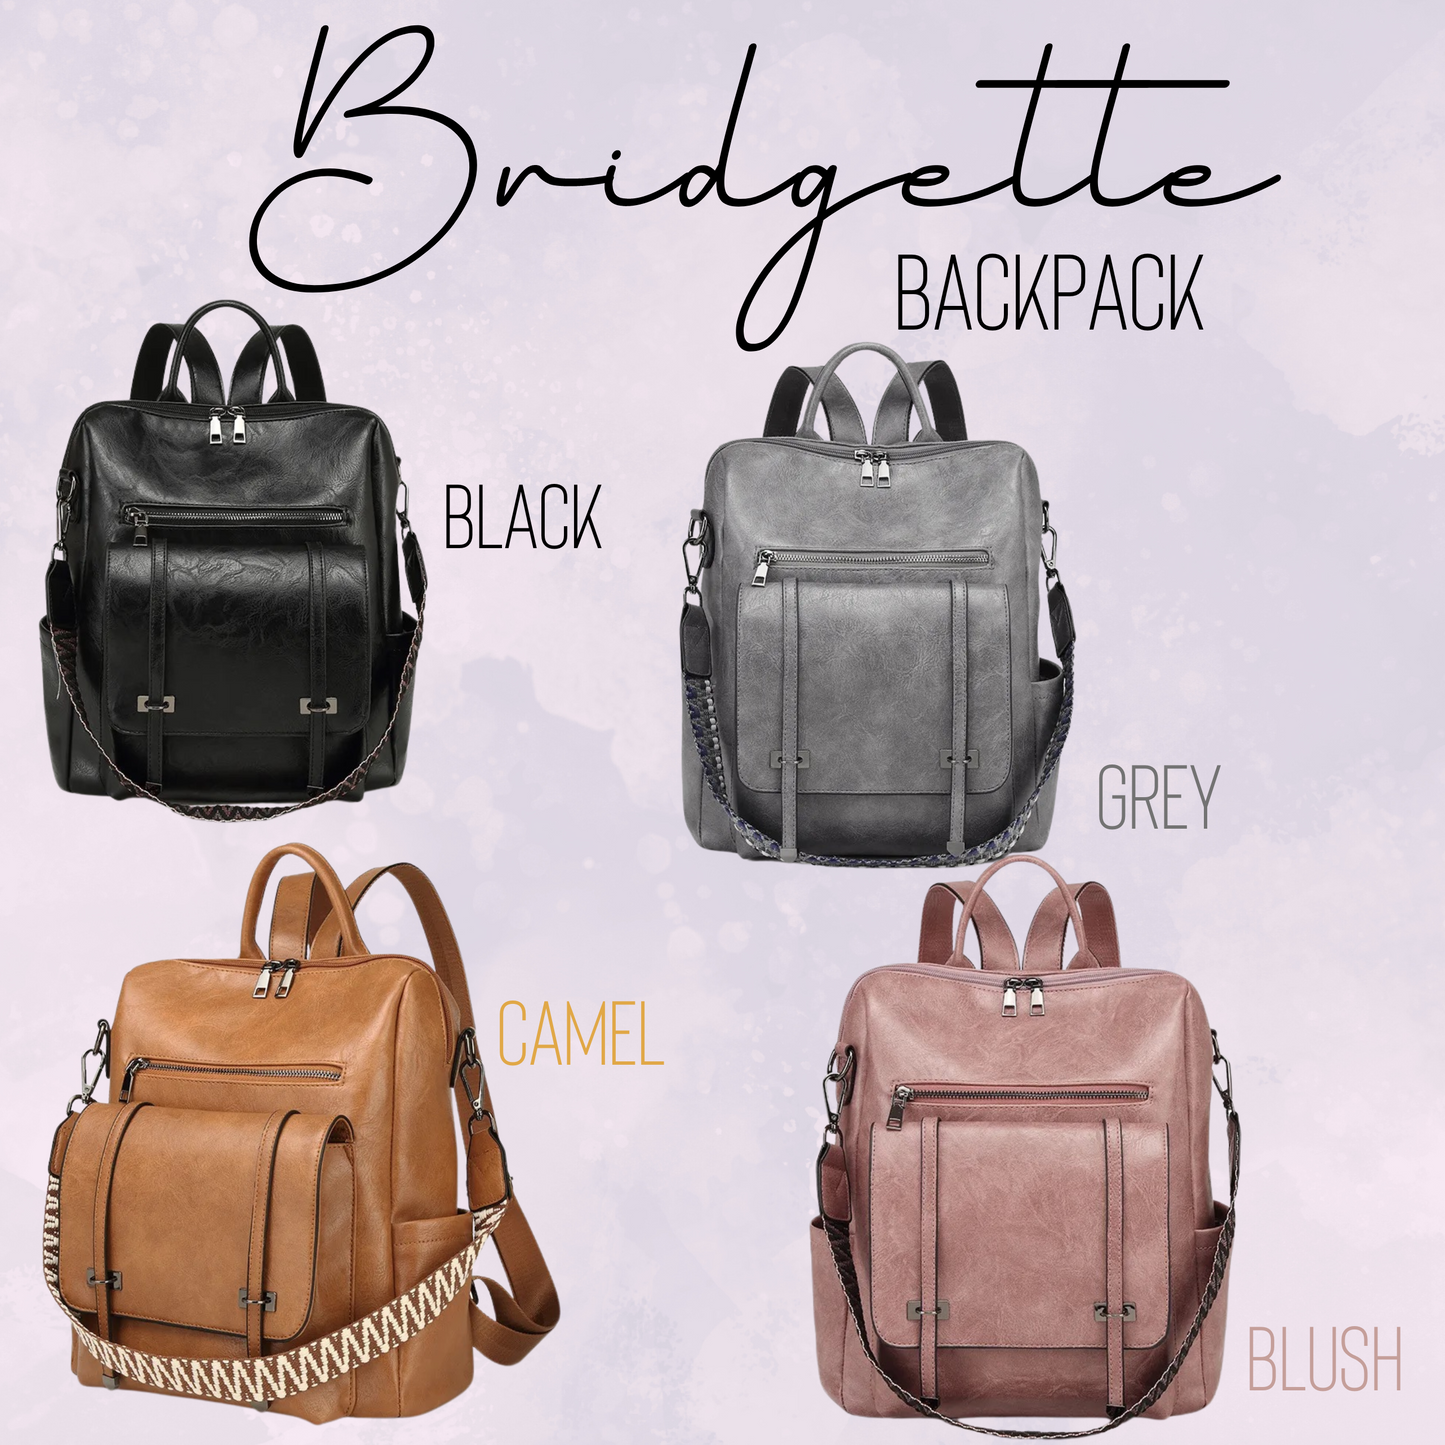 Bridgette Backpack